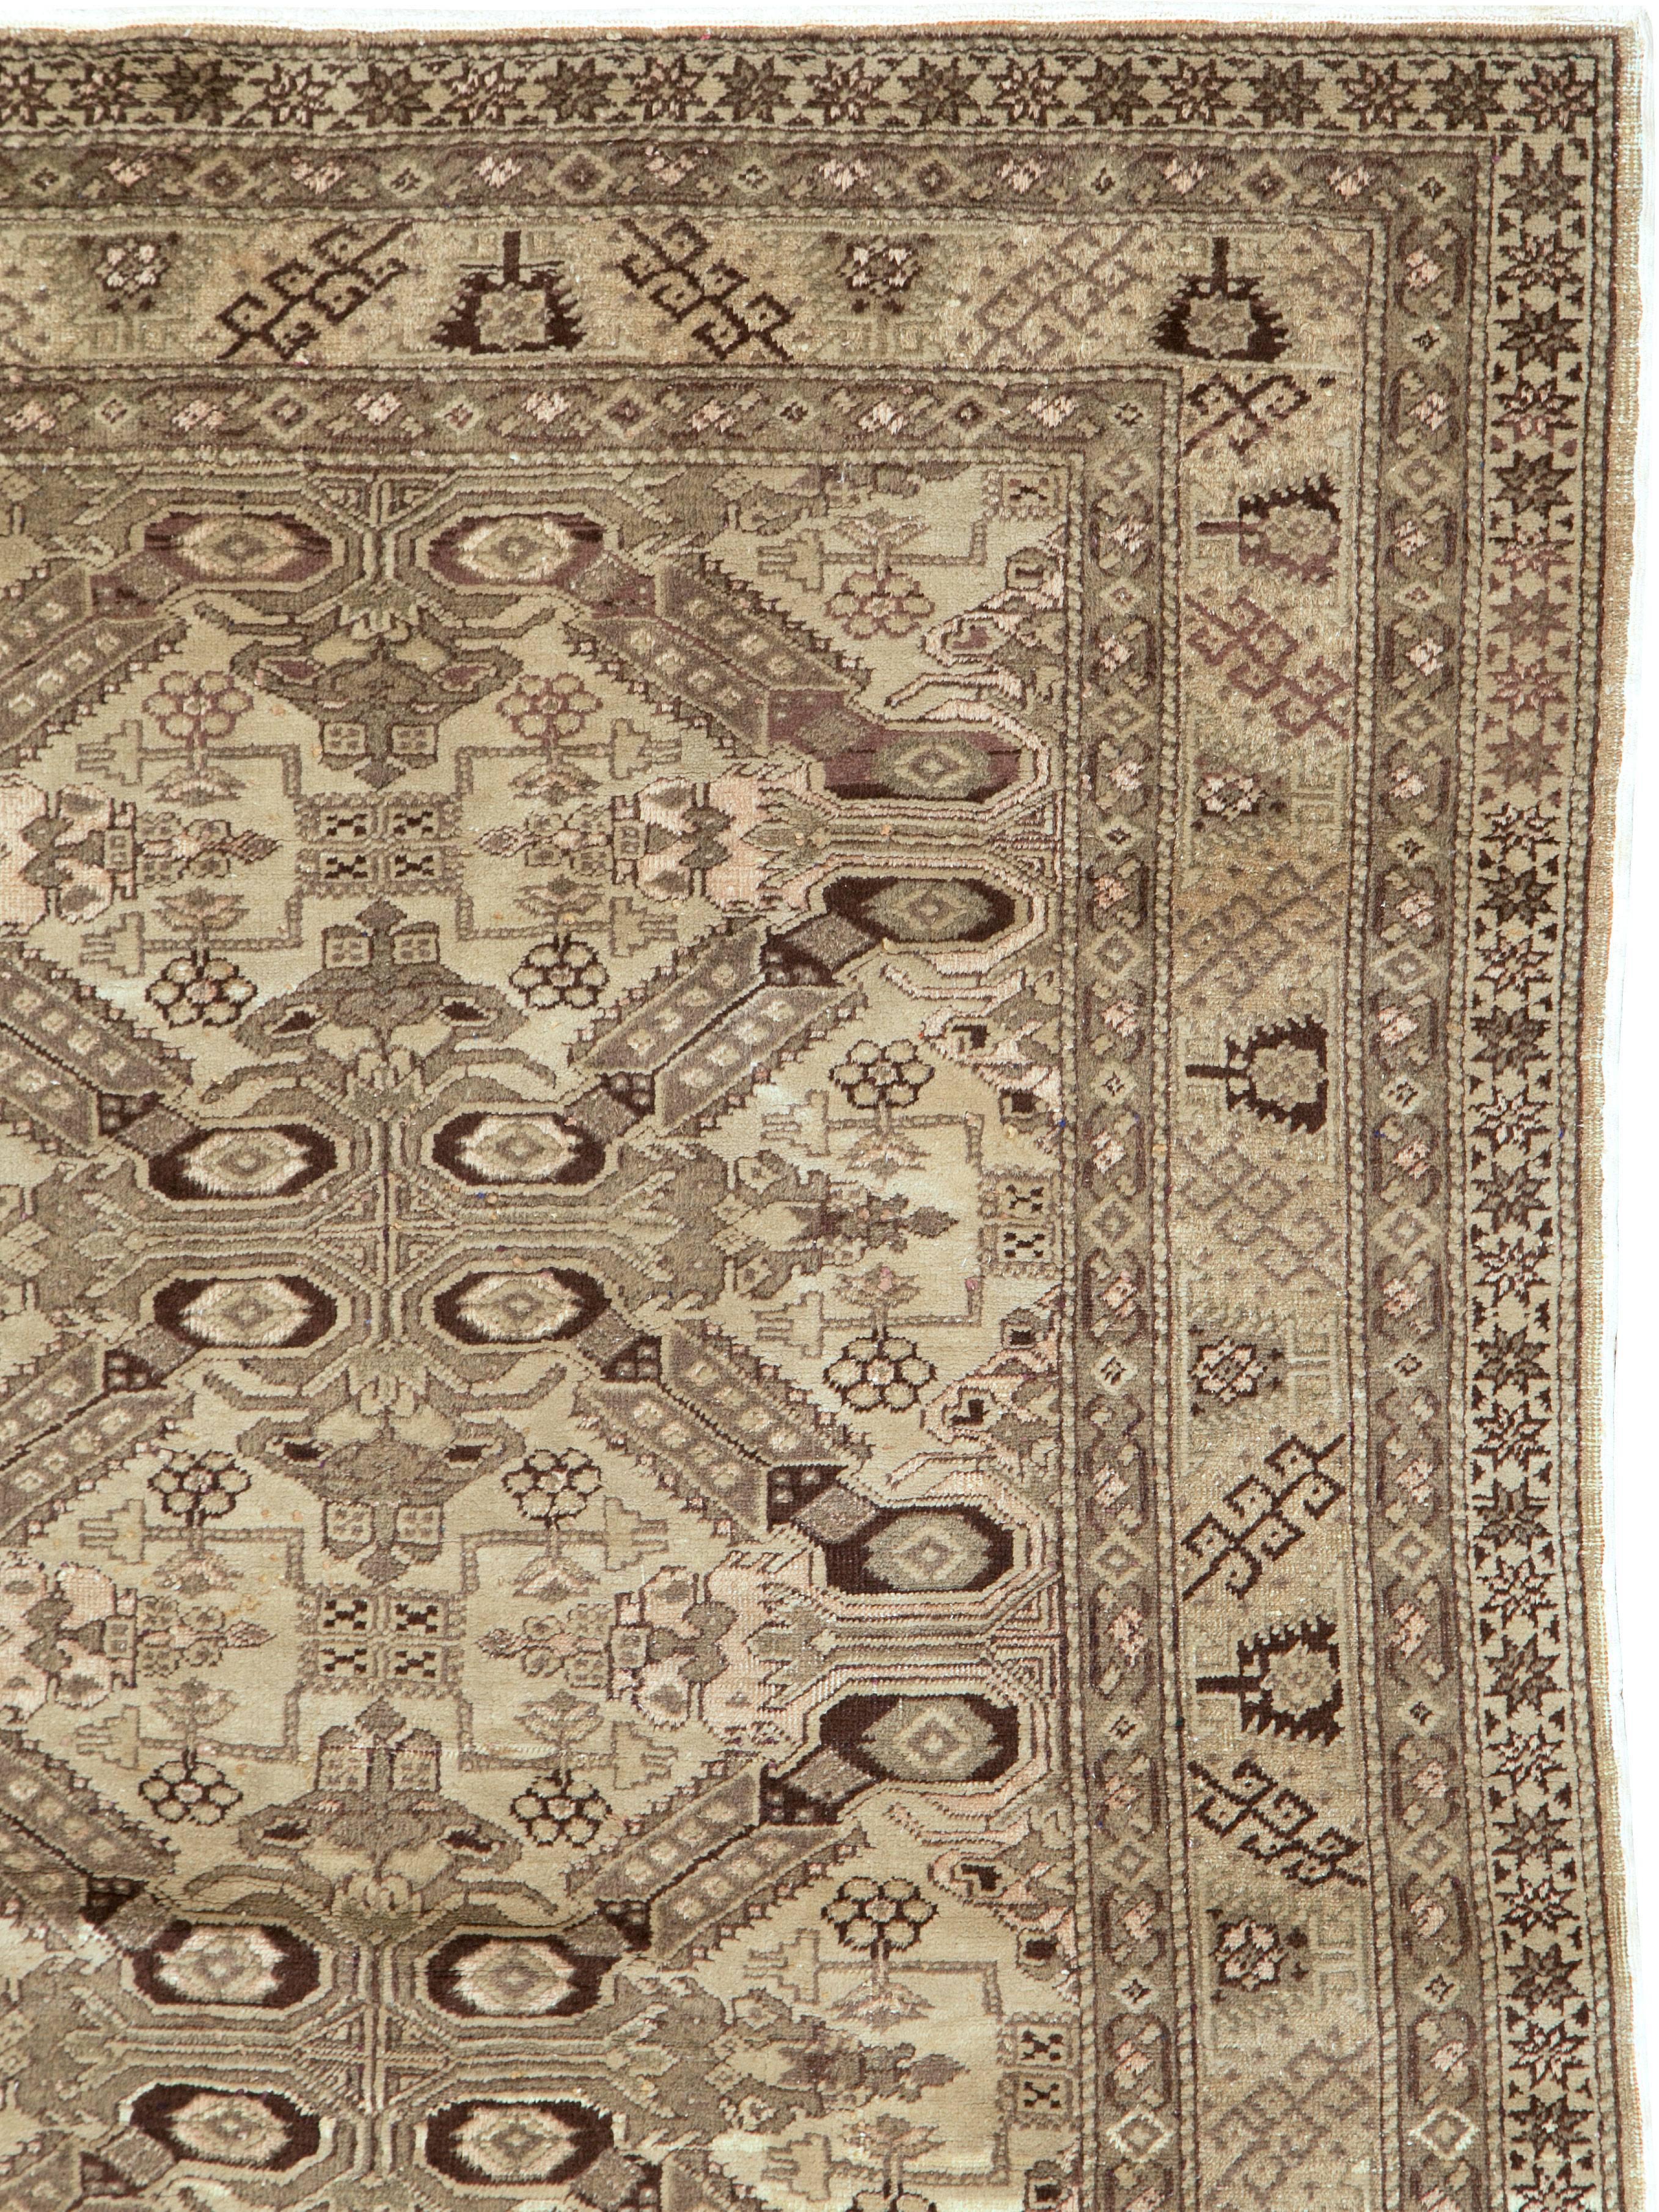 A vintage Turkish Sivas carpet from the mid-20th century.